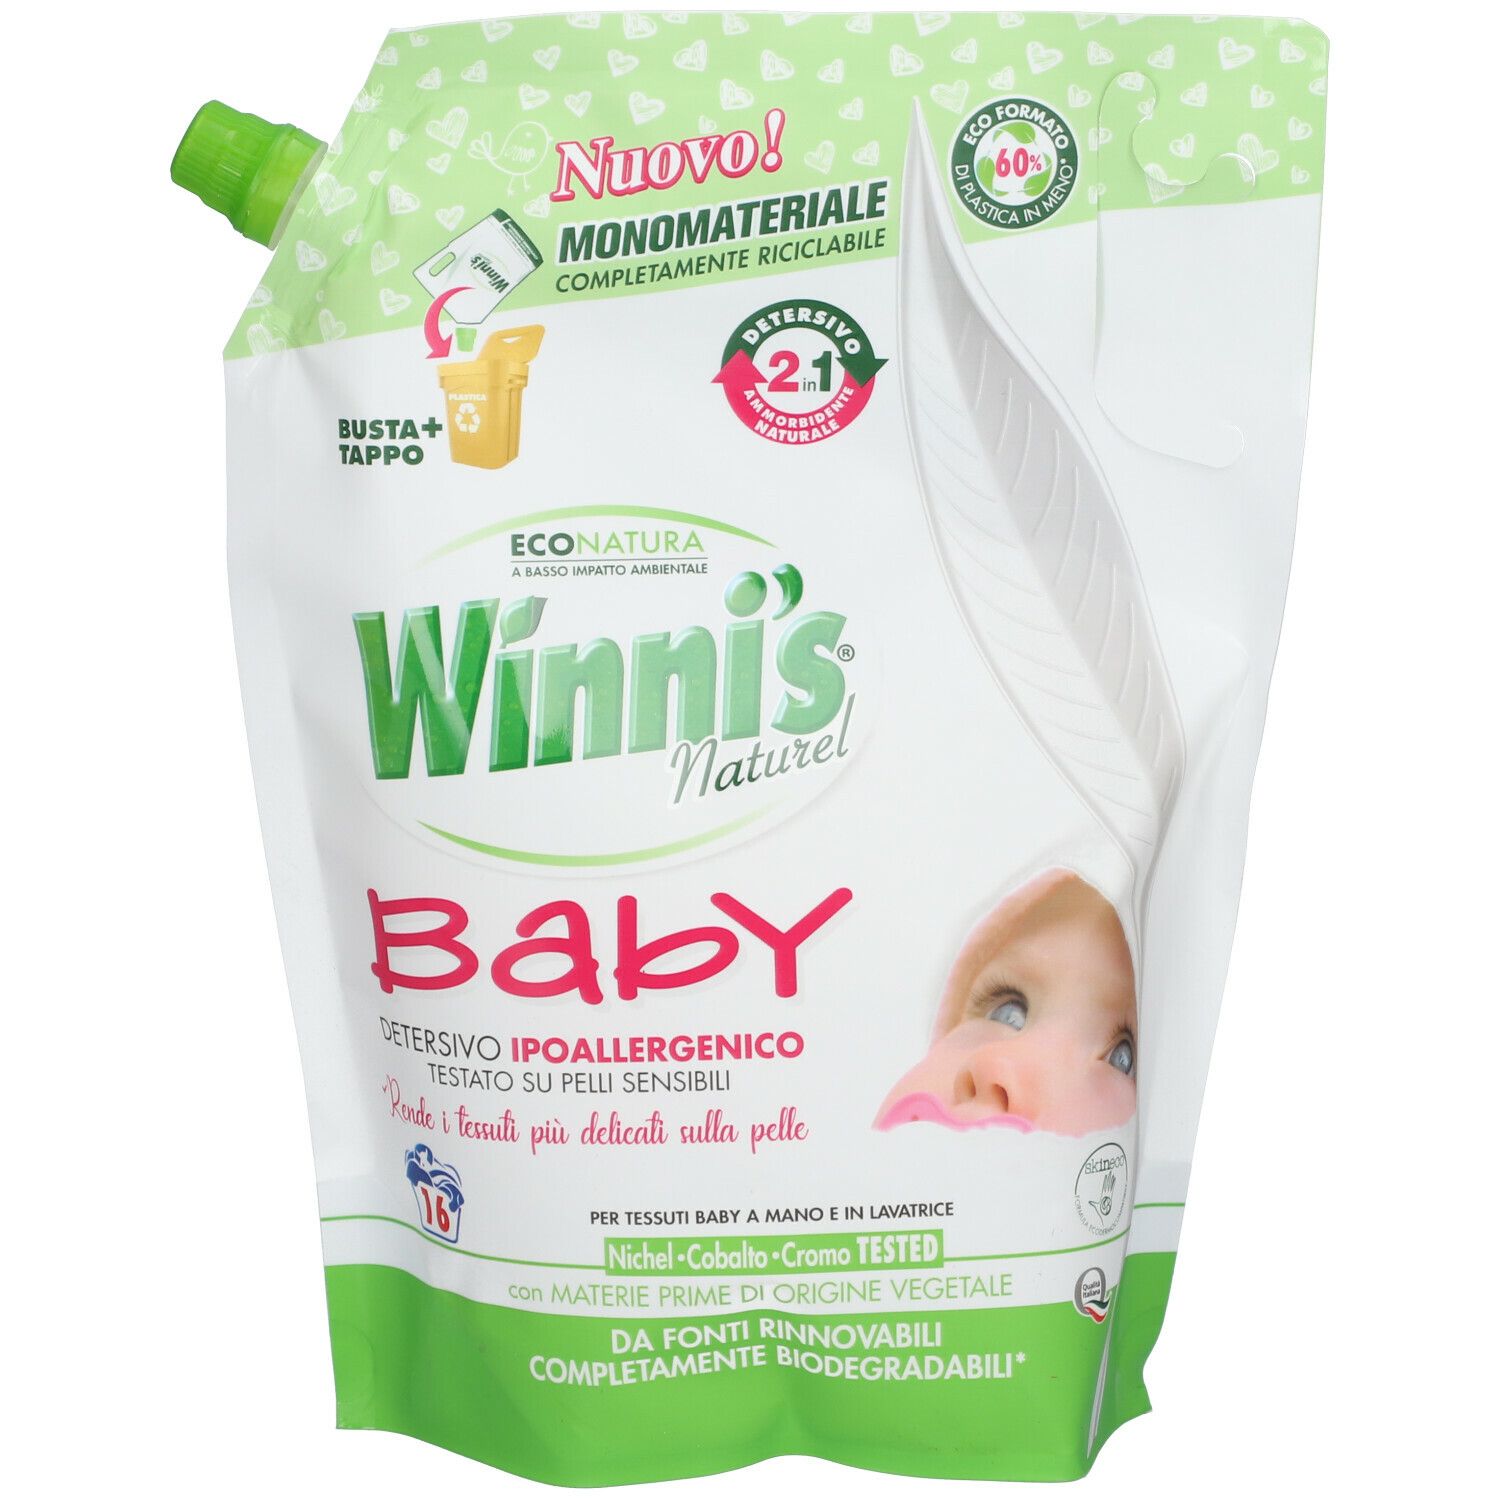 Winni's Naturel Detersivo Lavatrice Baby 2 in1 Ecoformato 800 ml